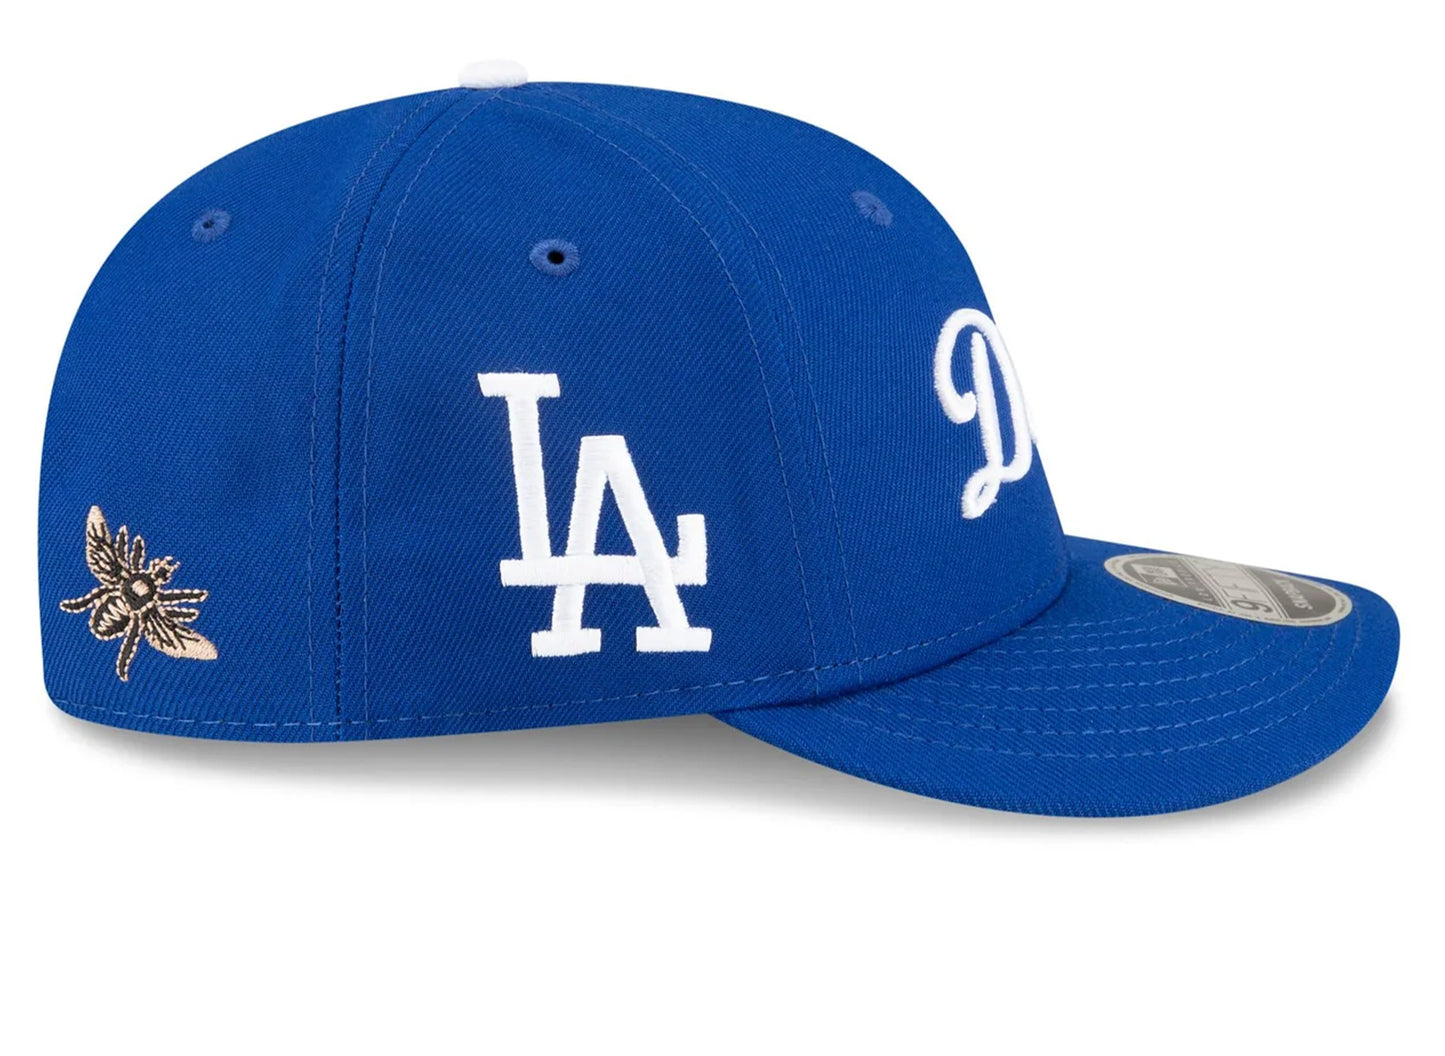 New Era x Felt Los Angeles Dodgers Low Profile 9FIFTY Snapback Hat